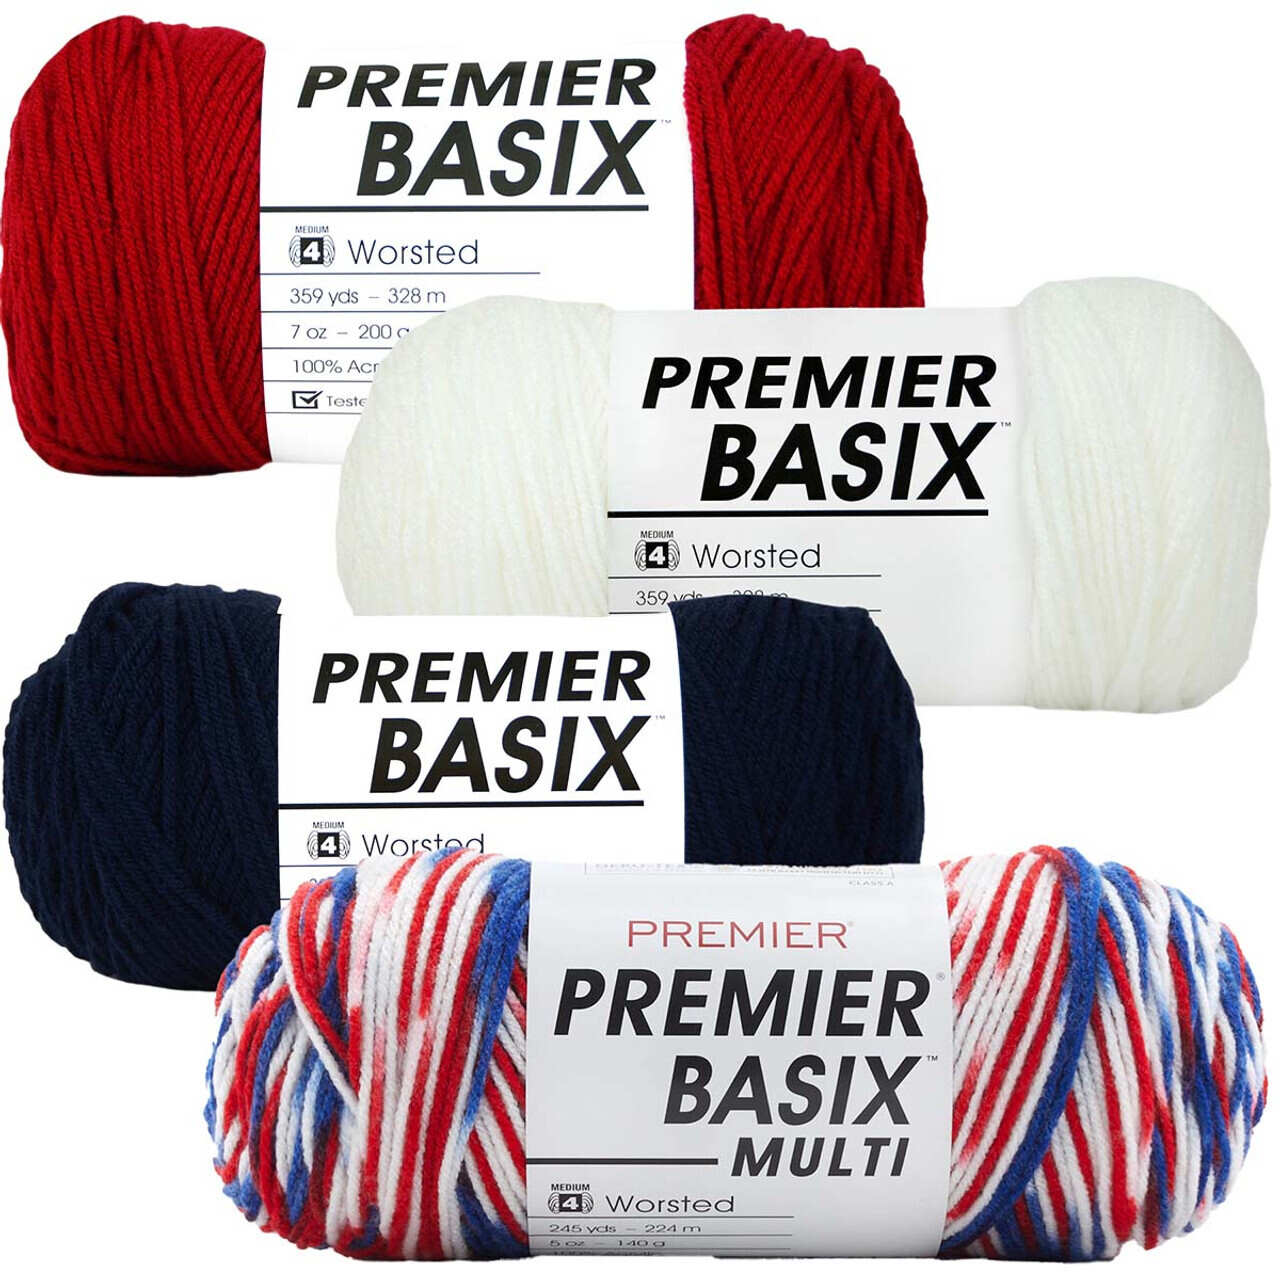 Premier® Basix® Chenille Yarn